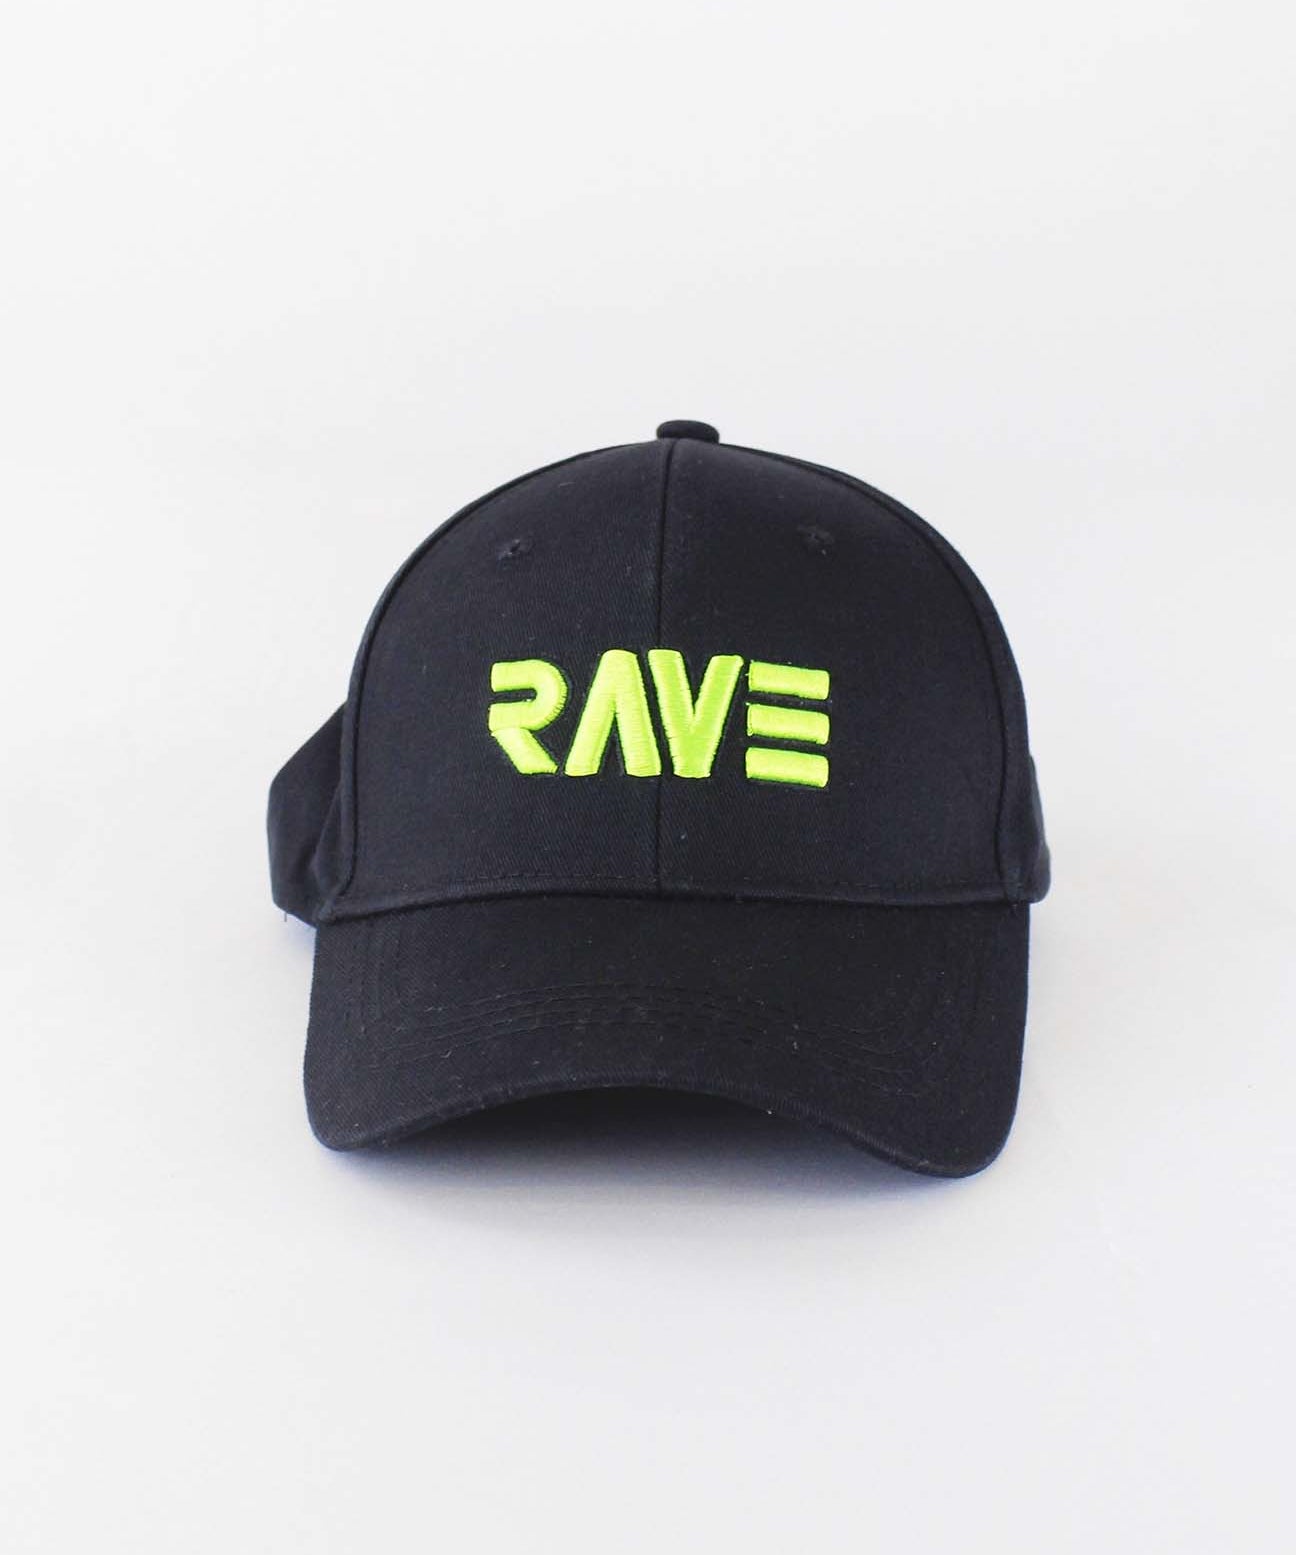 'RAVE' EMBROIDERED CAP - svnx